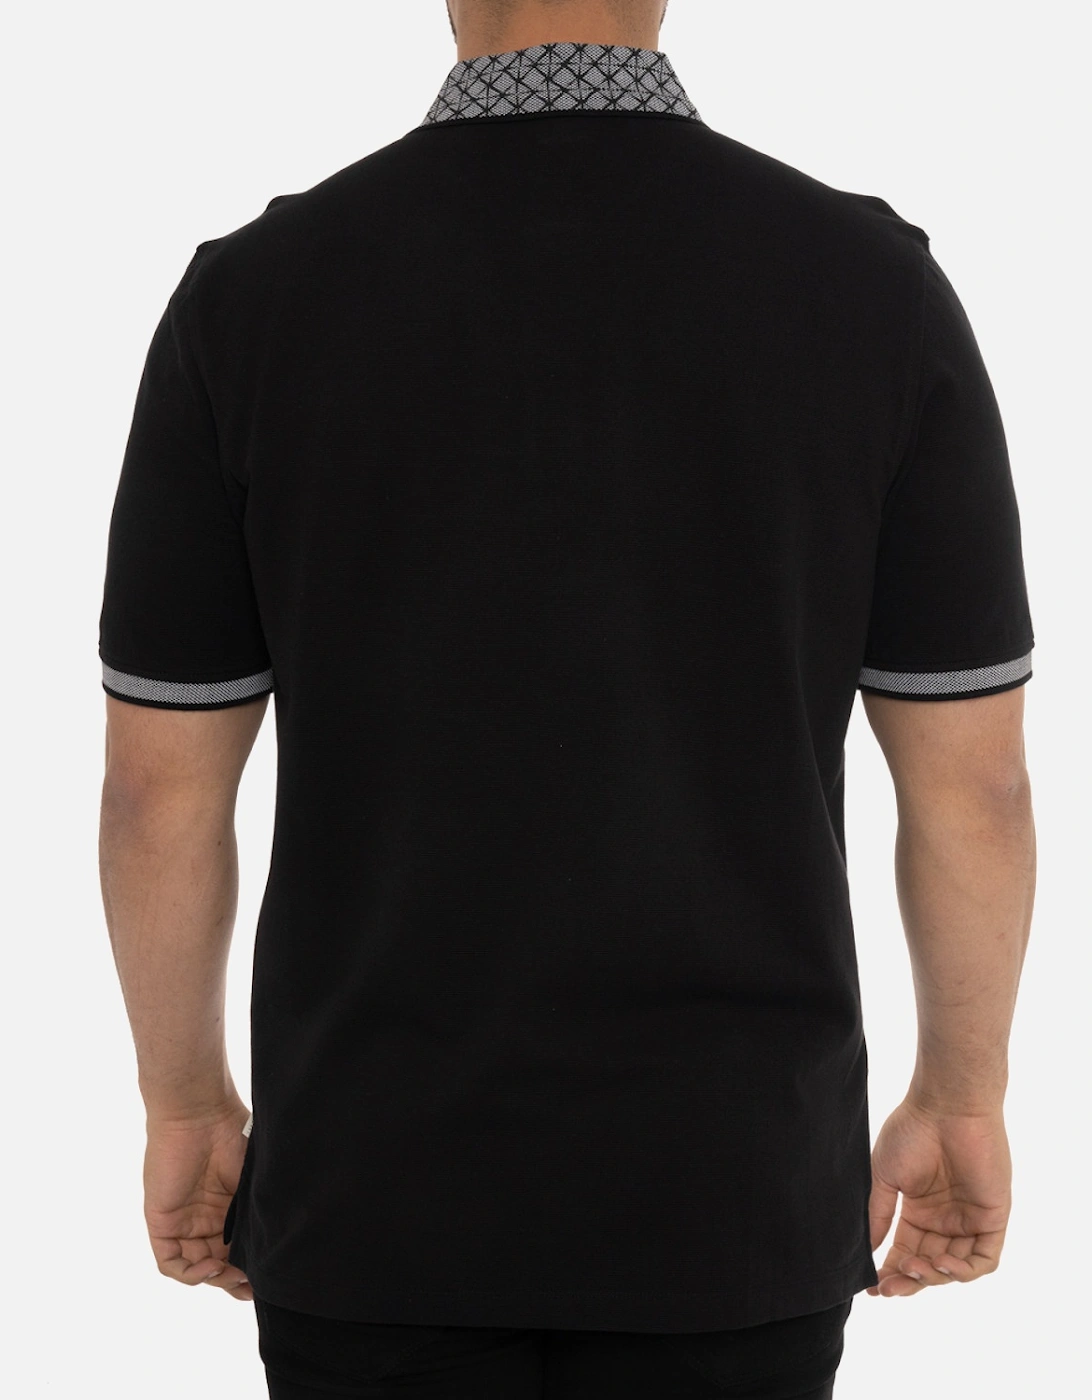 Mens Collar Trim Polo Shirt (Black)